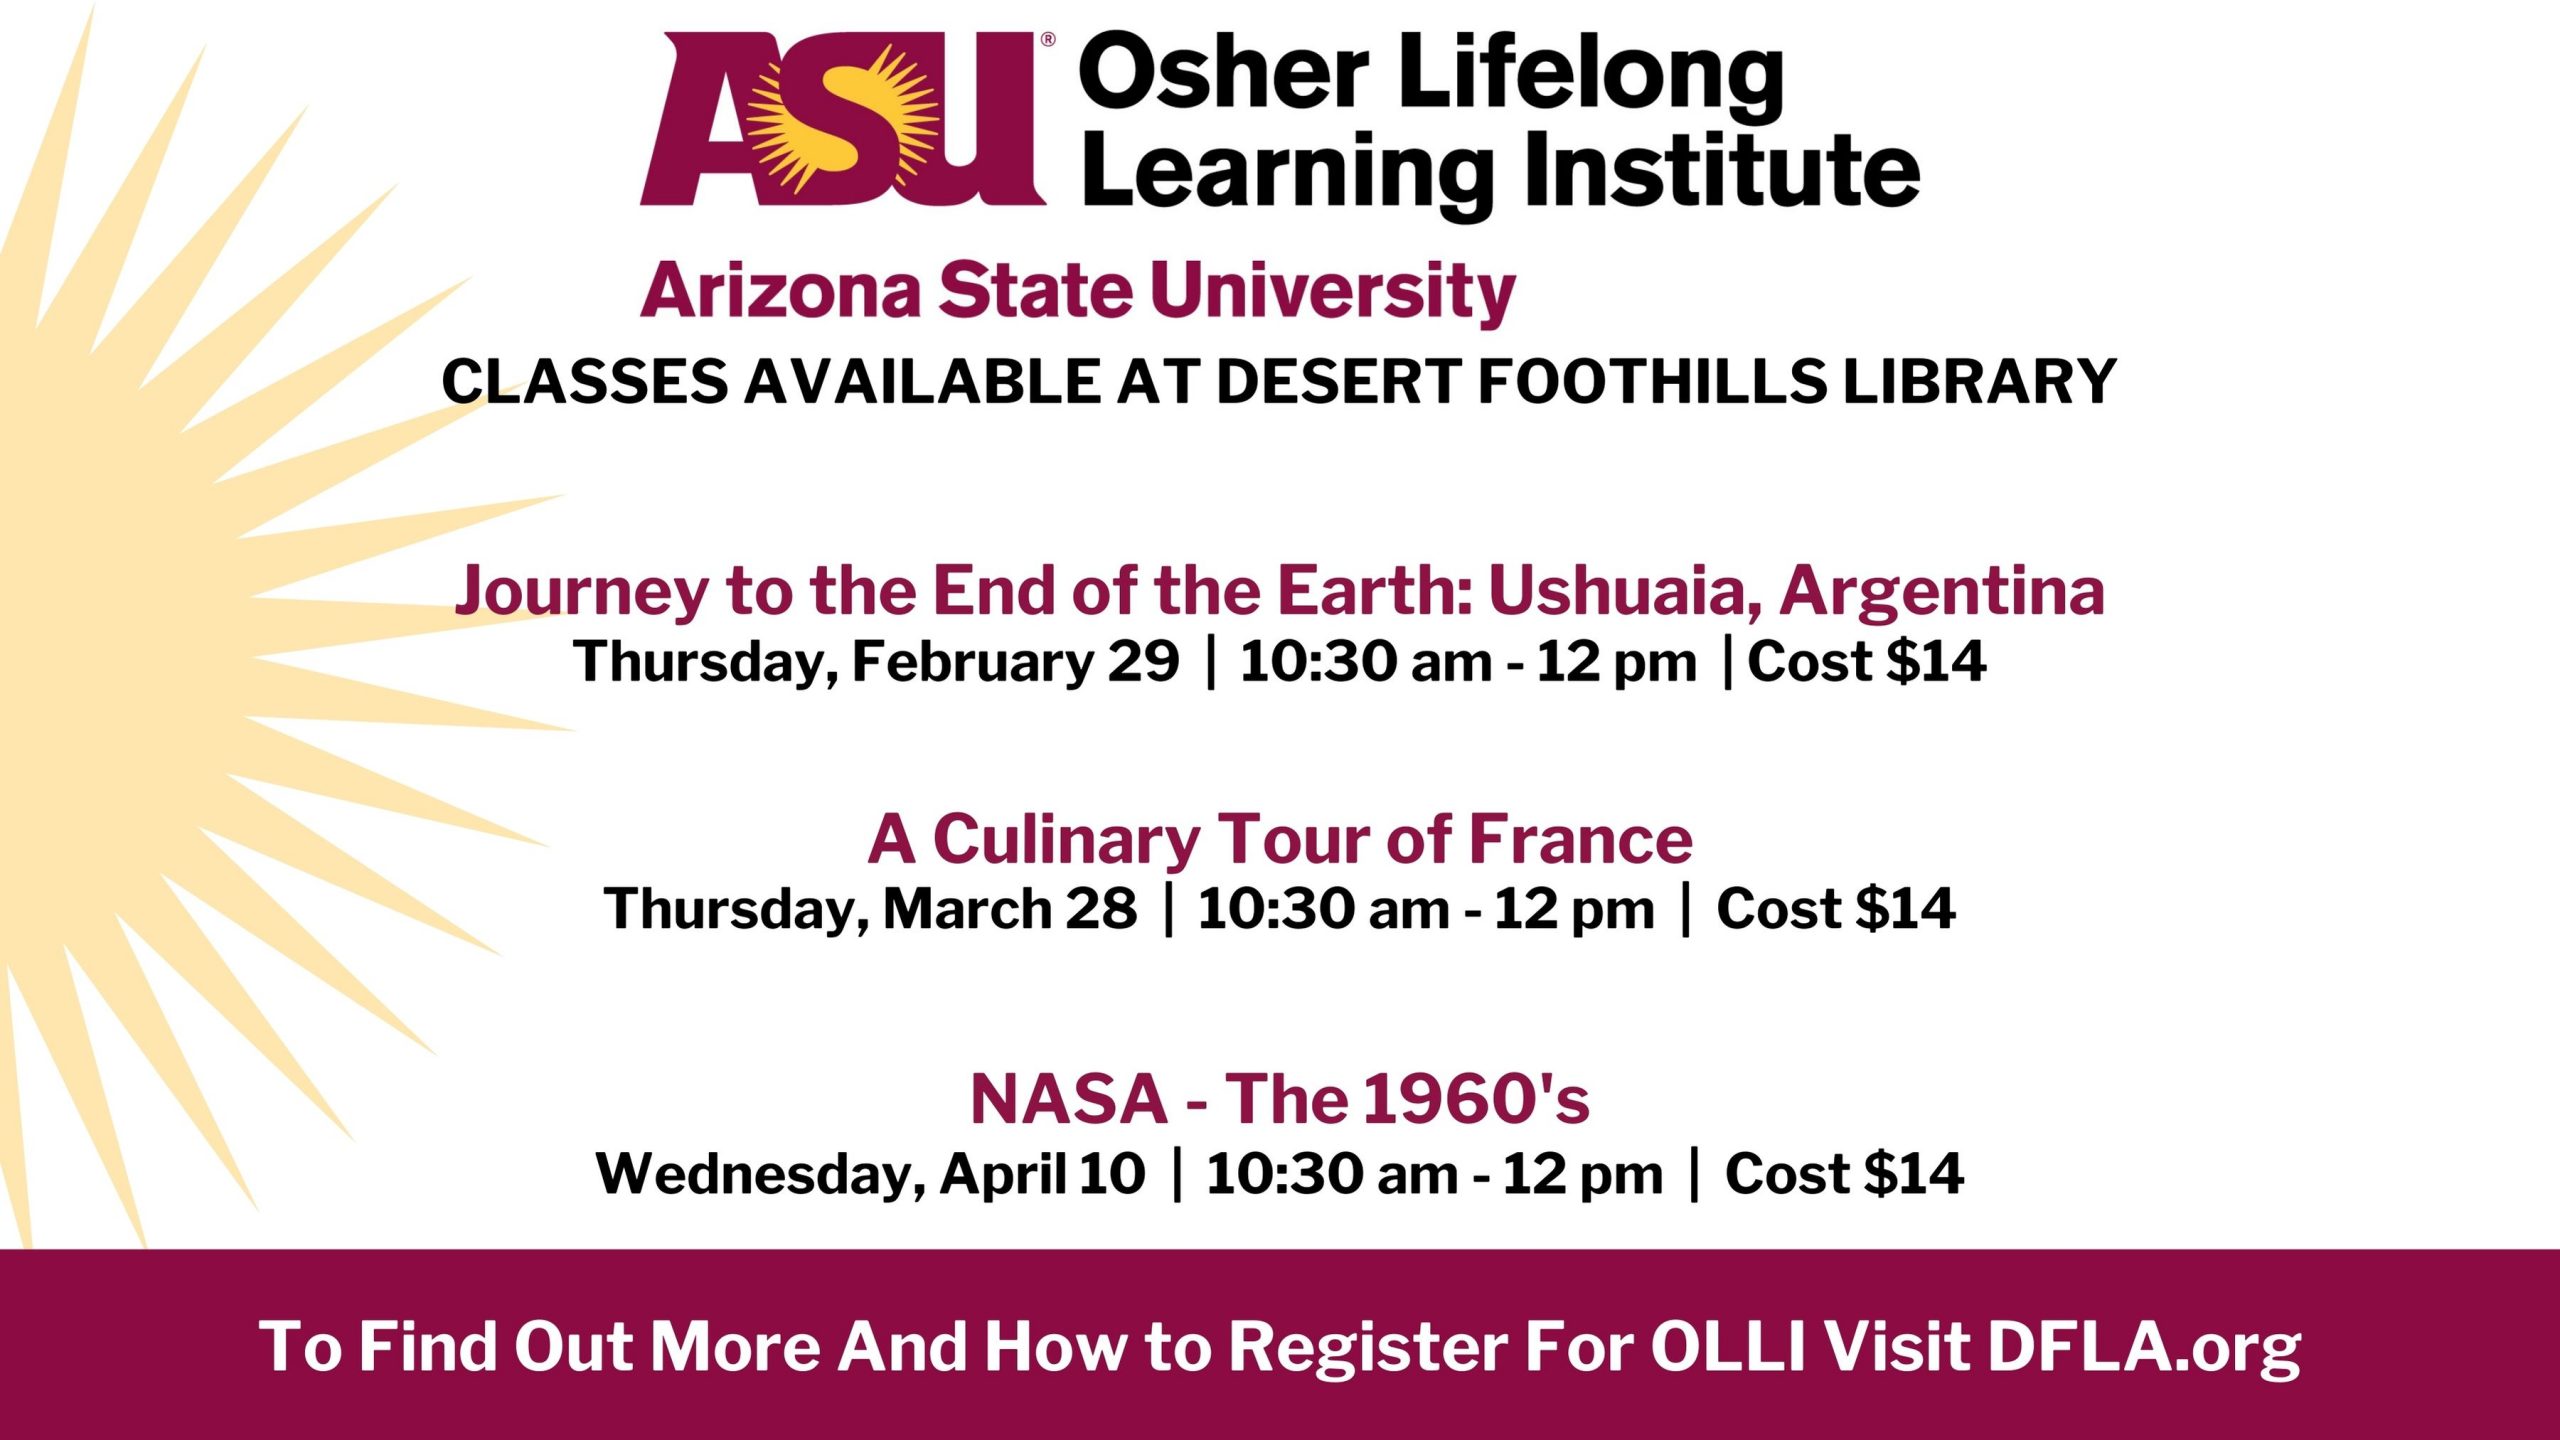 Osher lifelong Learning Institute classes at the desert foothills library